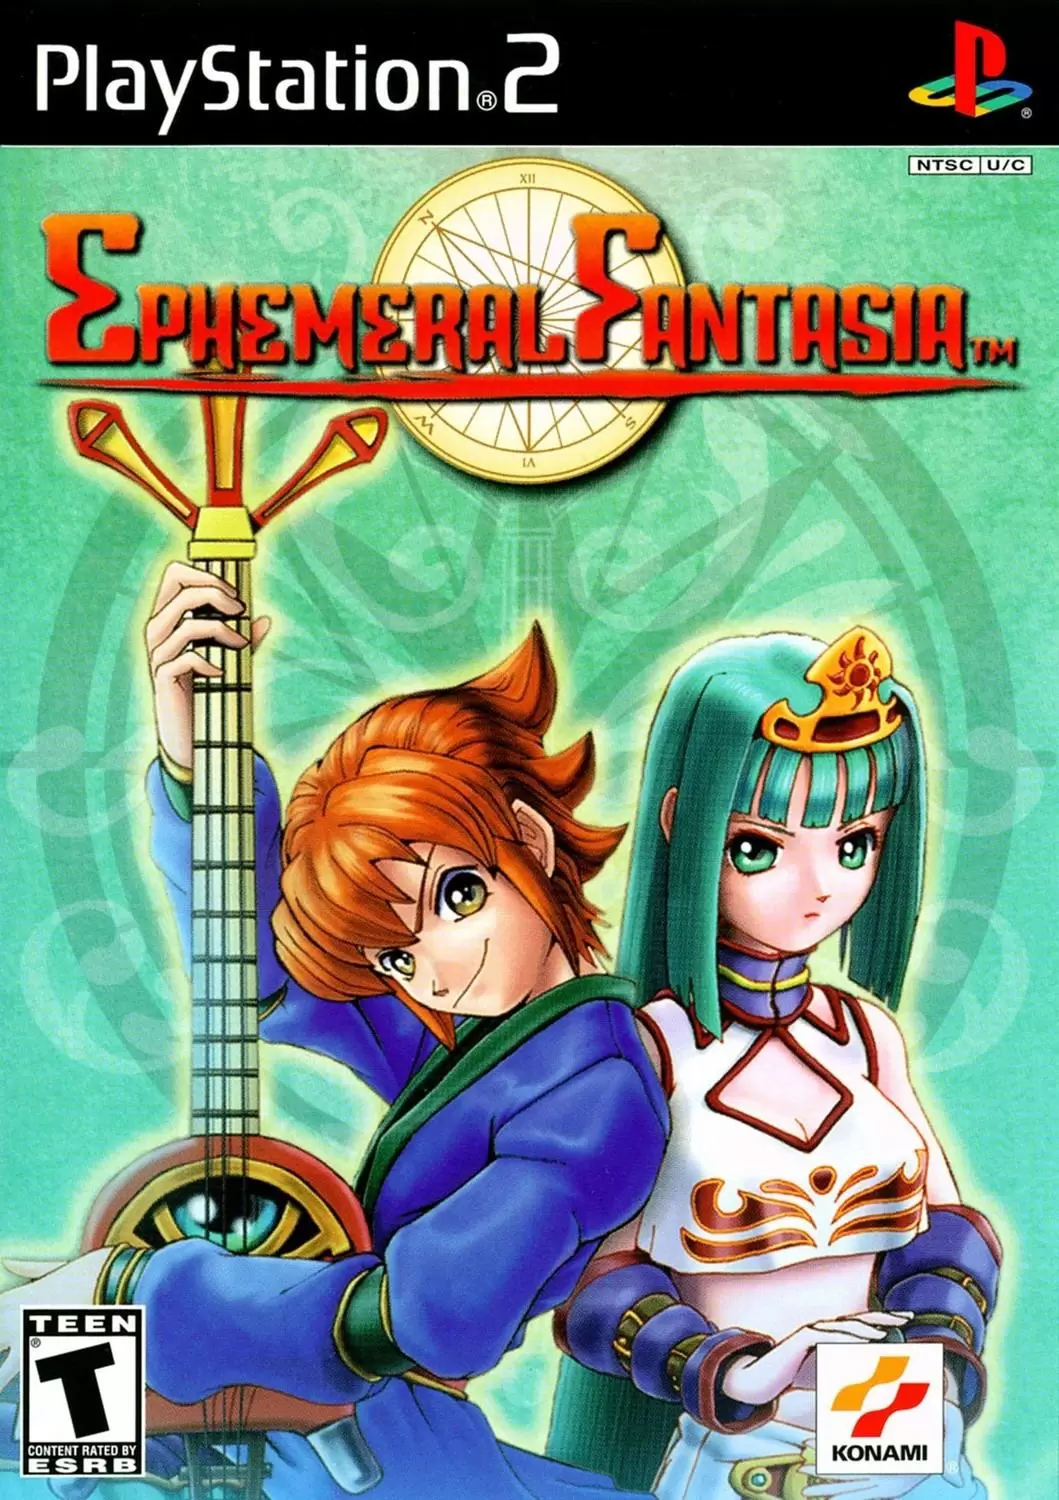 PS2 Games - Ephemeral Fantasia